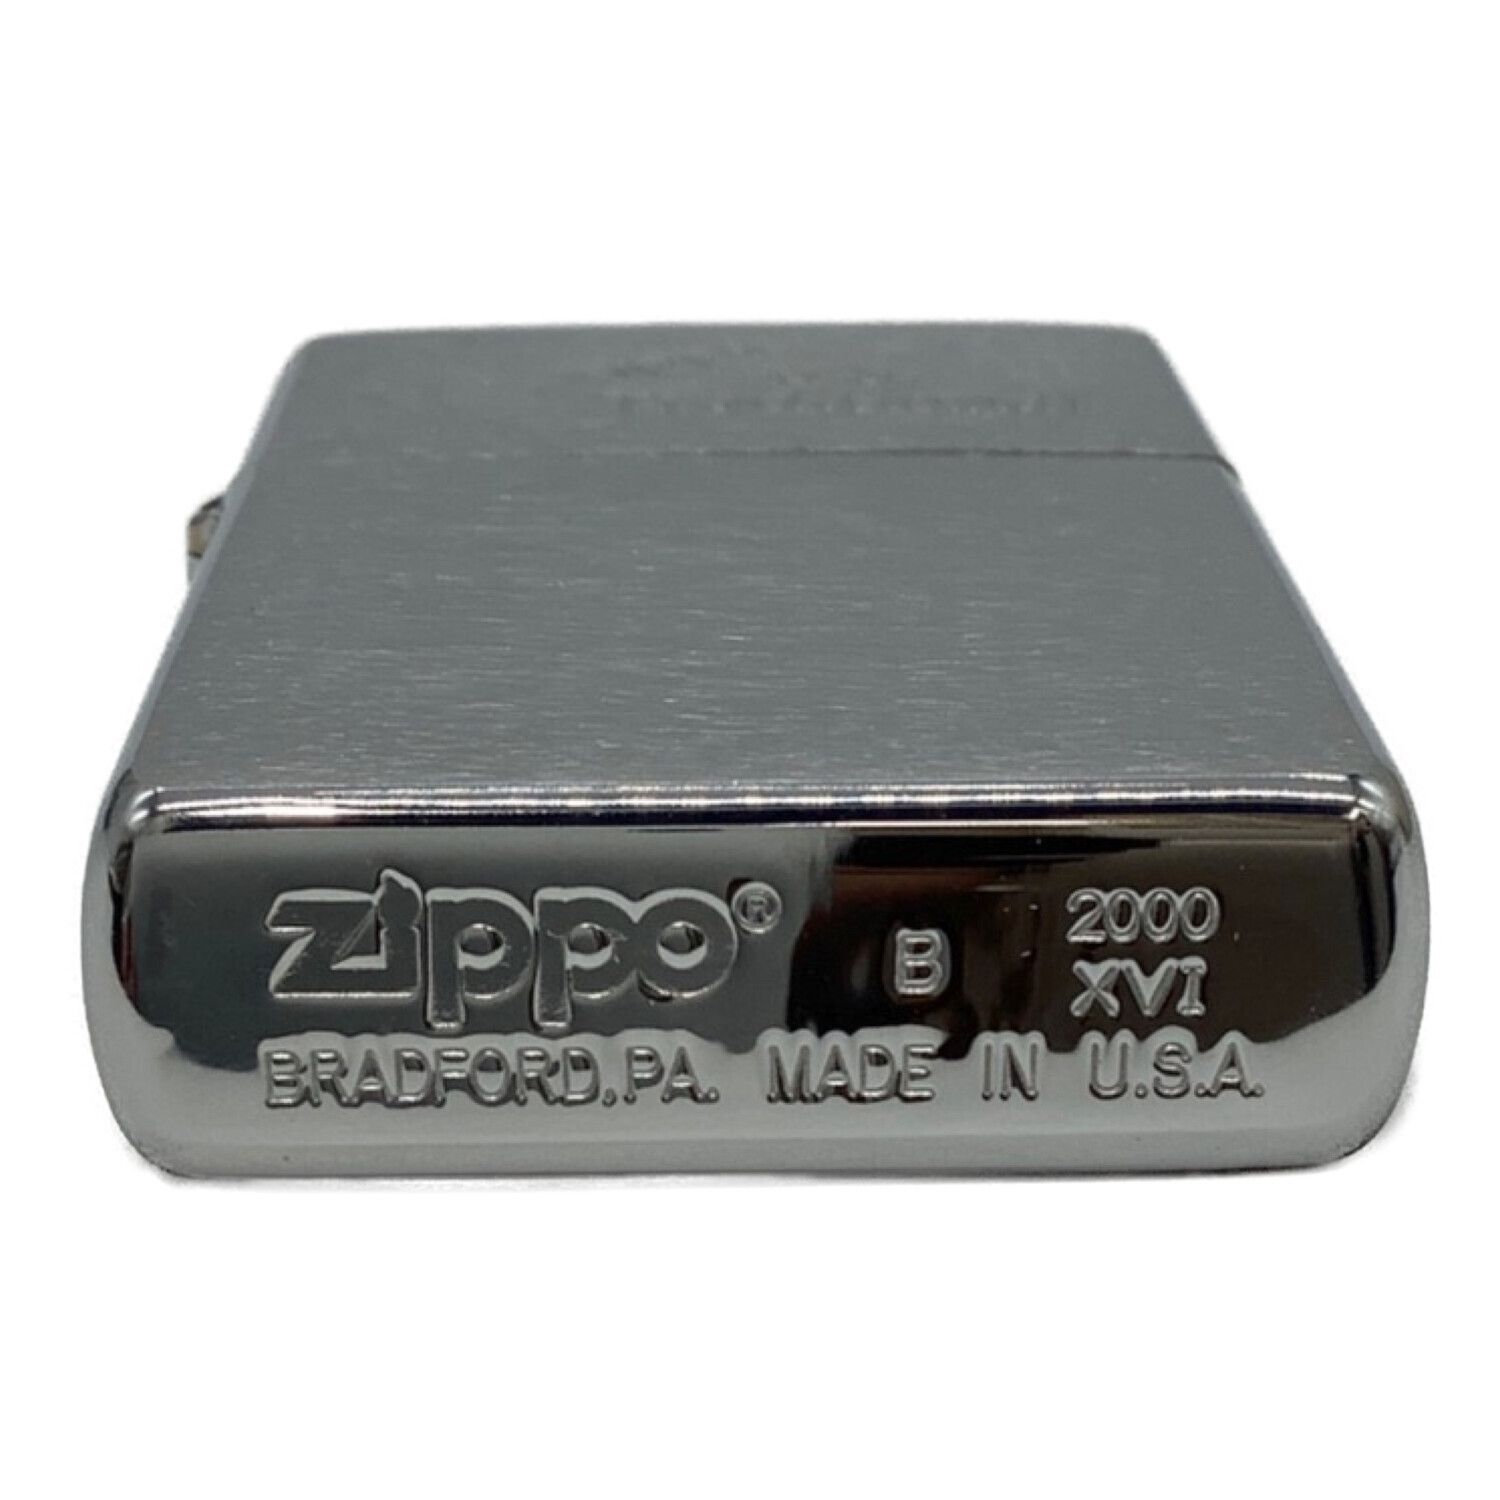 ZIPPO (ジッポ) クロノ懐中特別セット ZIPPO:2000年製造 懐中時計:1999 